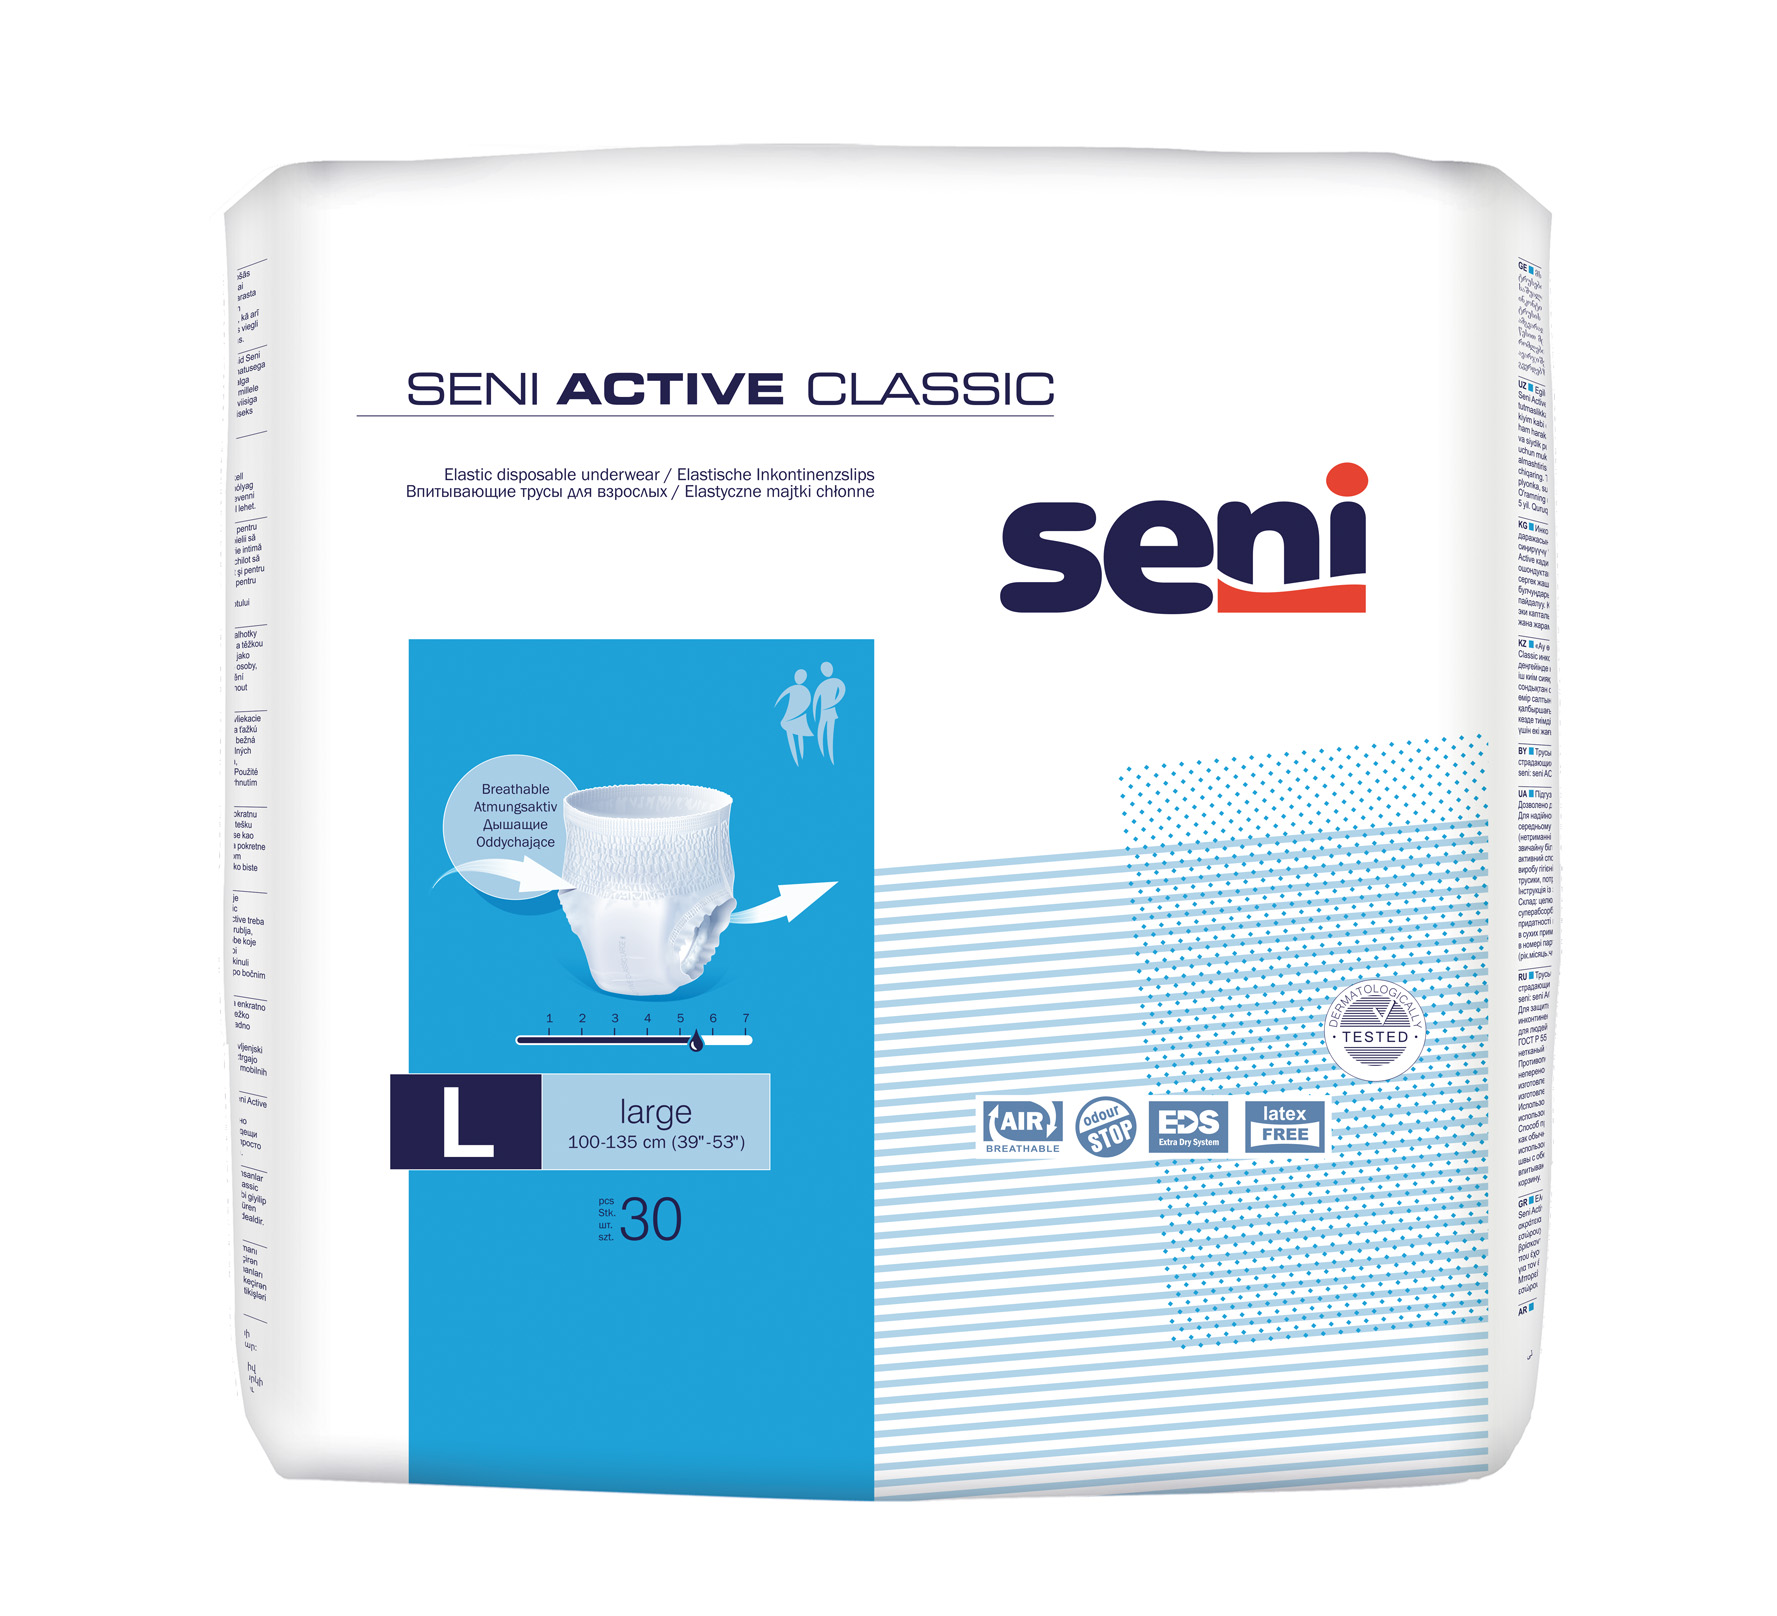 seni active classic large a30 12570 1 1626443787